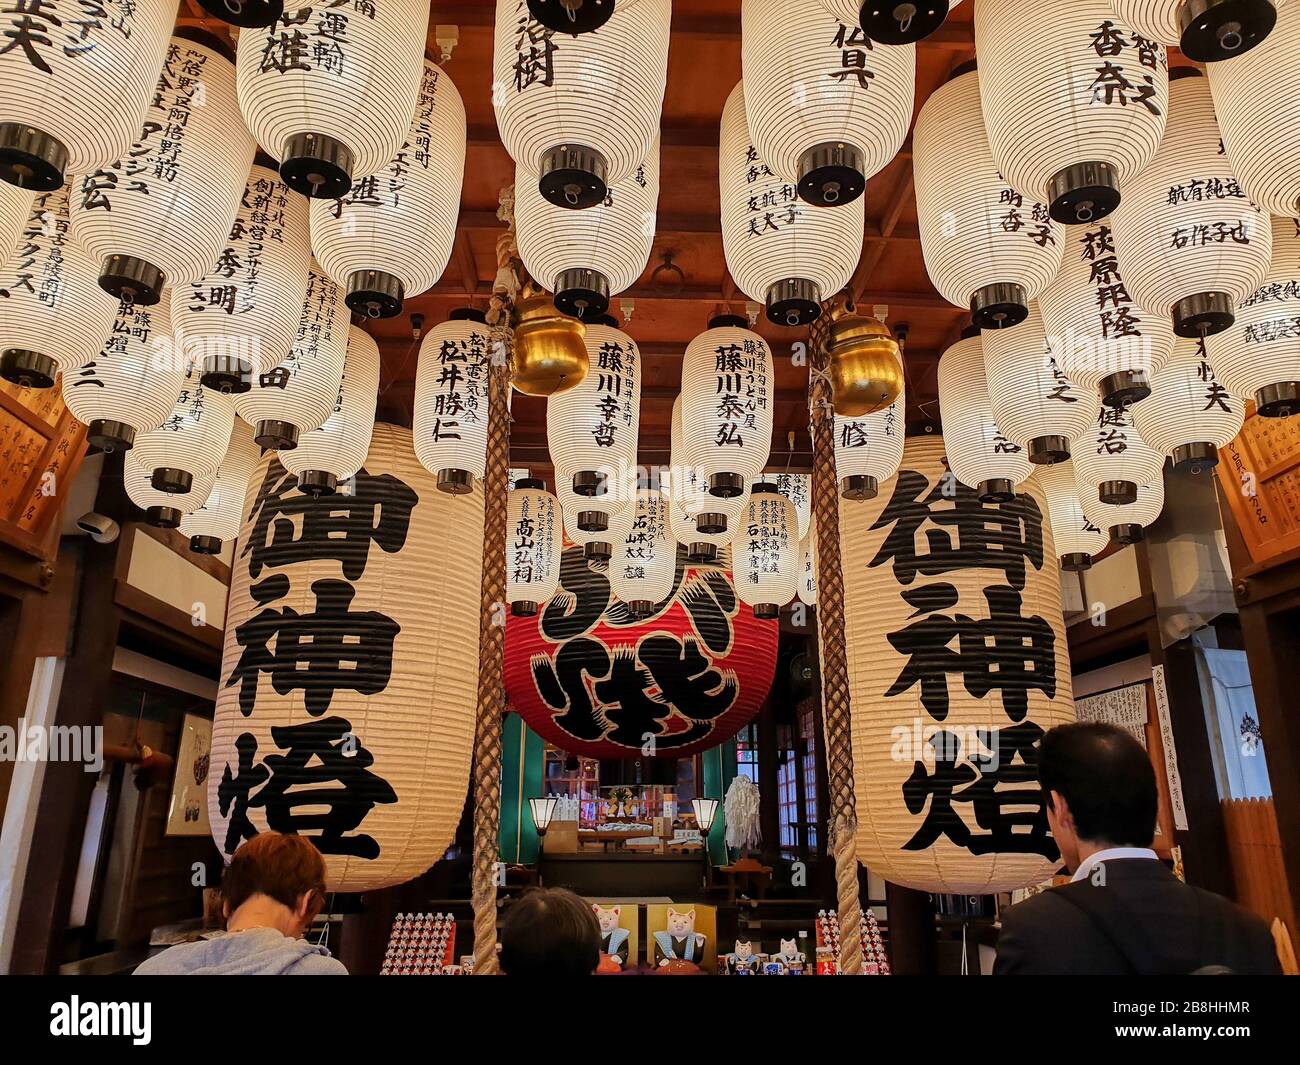 Many lanterns hanging in the shrine Stock Photo